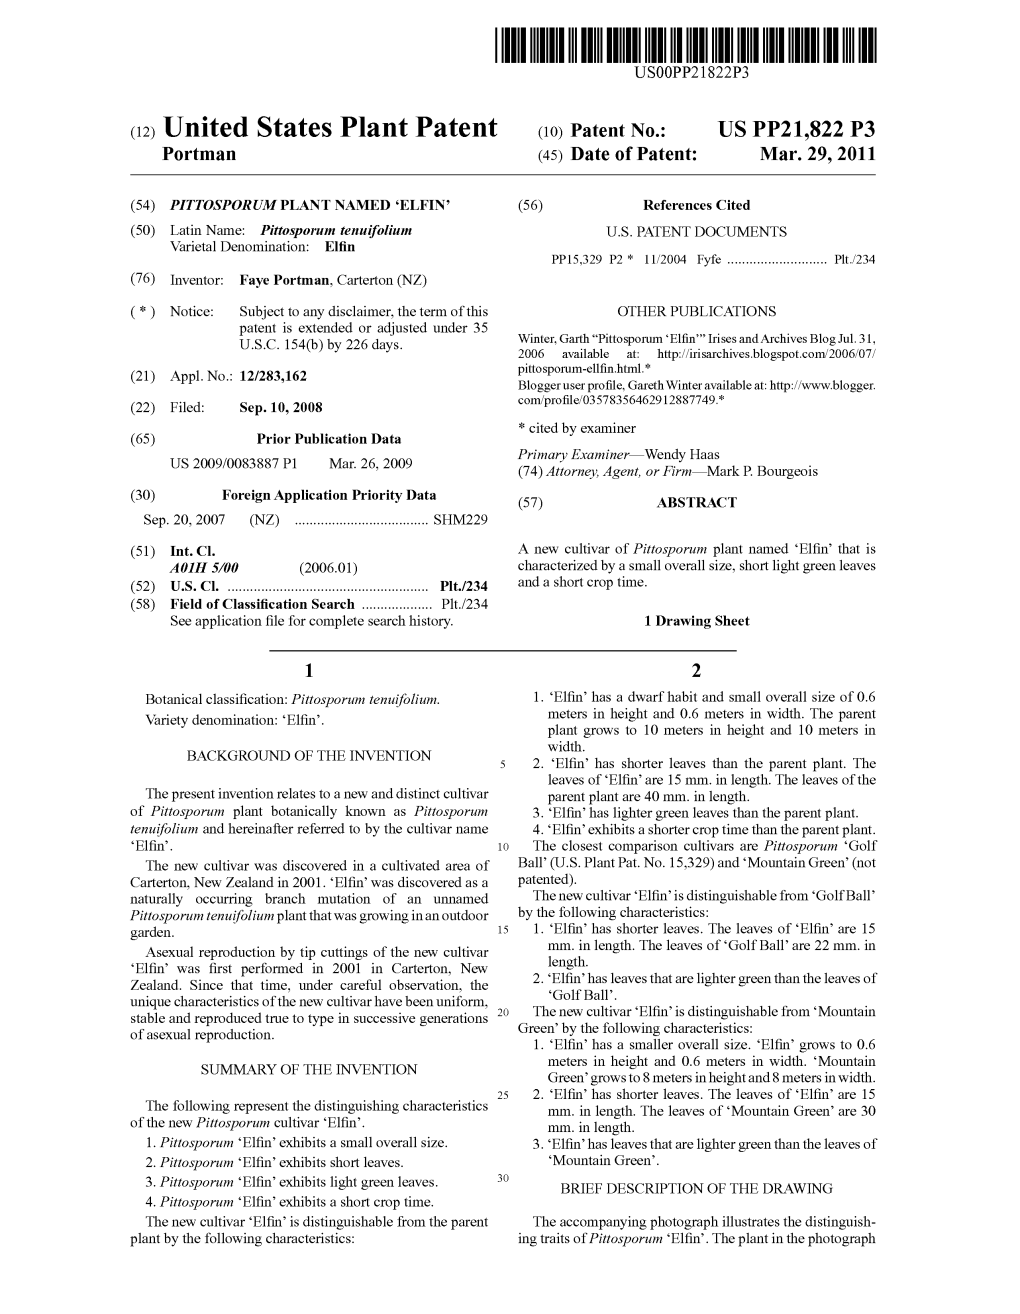 (12) United States Plant Patent (10) Patent No.: US PP21,822 P3 Portman (45) Date of Patent: Mar